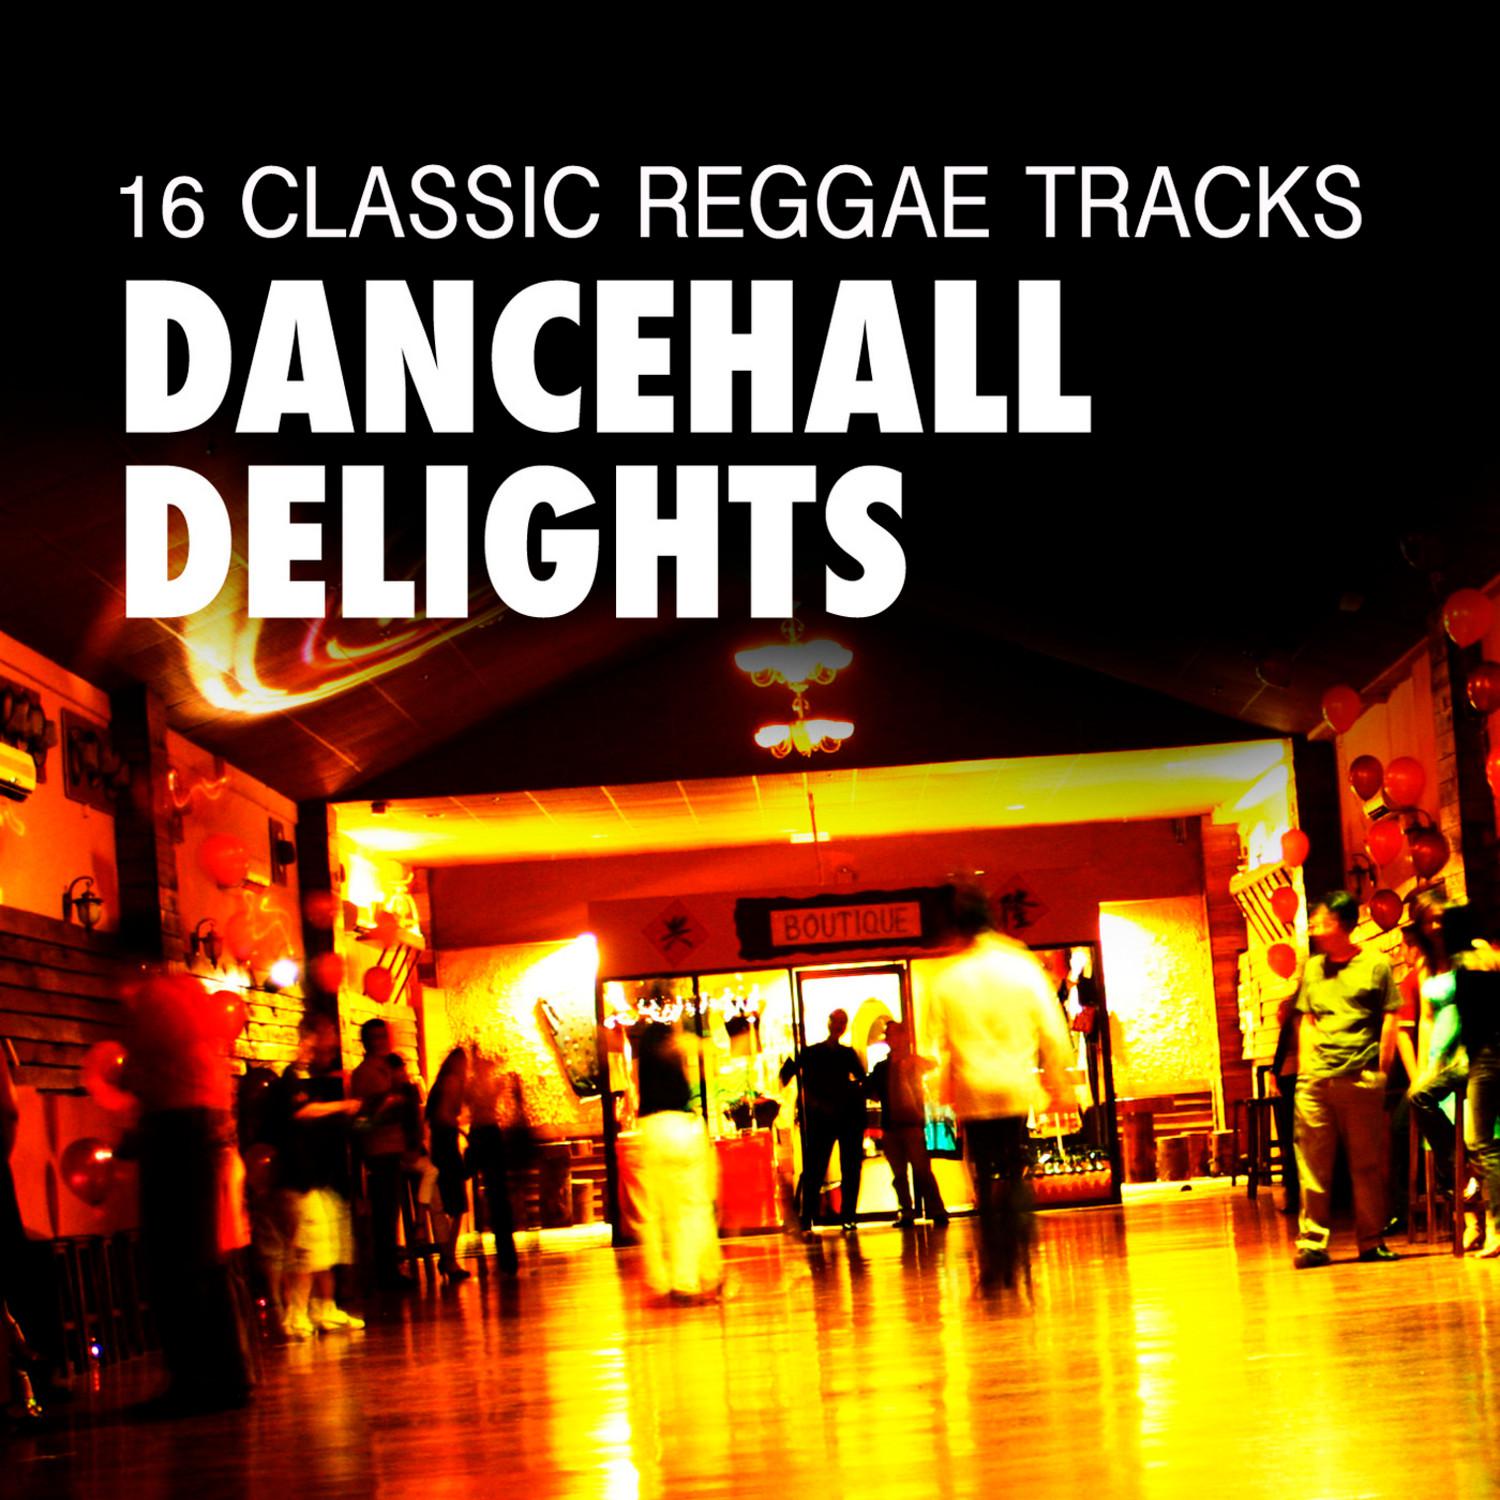 Dancehall Delights - 16 Classic Reggae Tracks